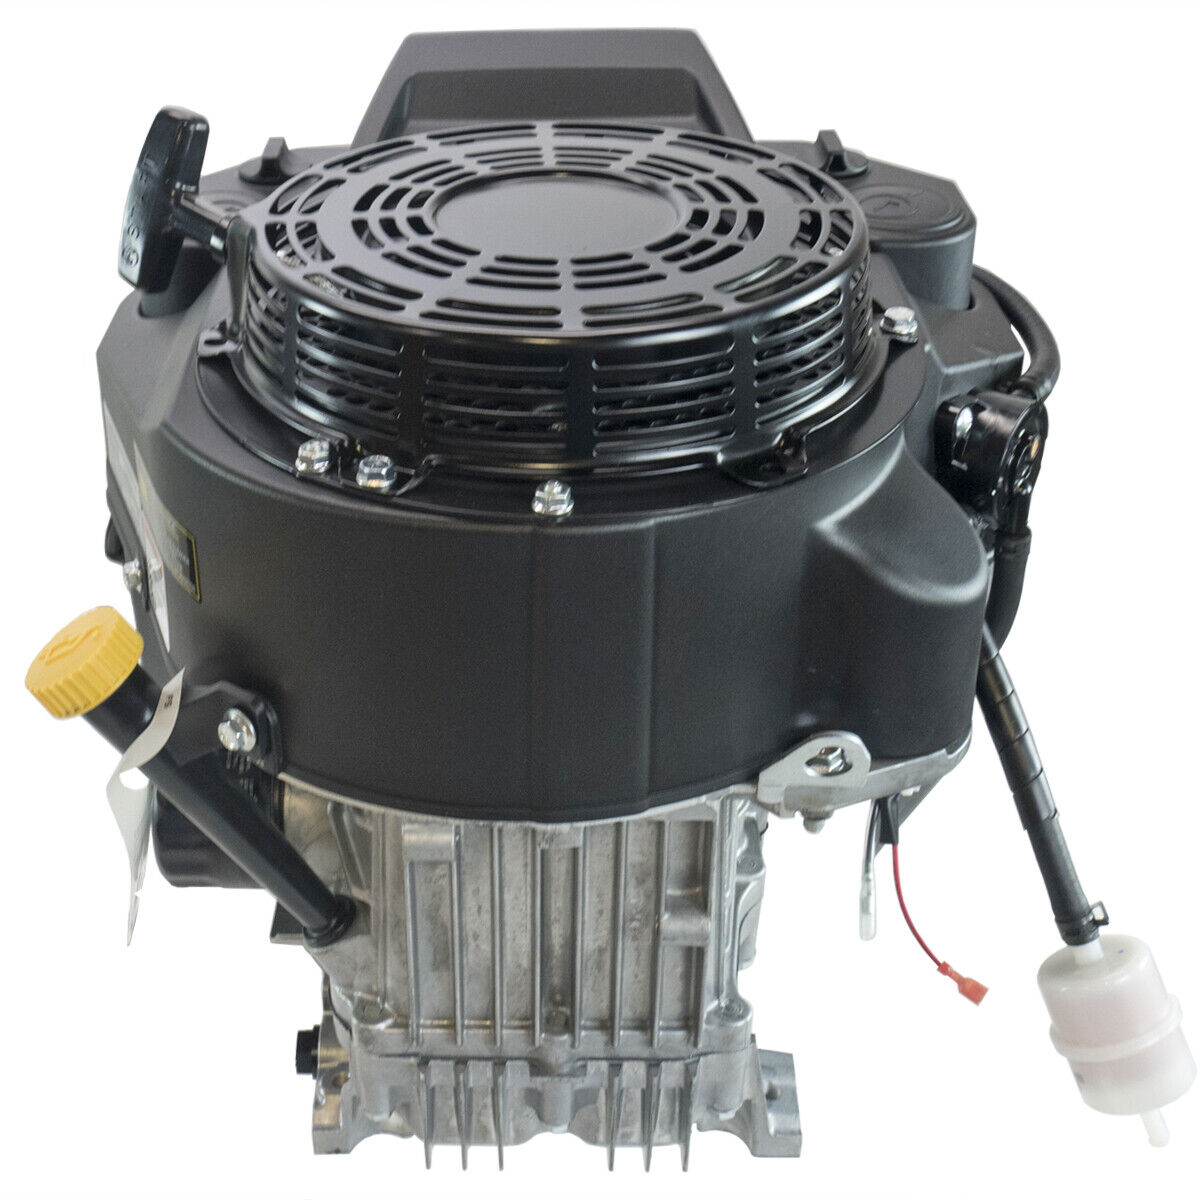 Kawasaki 18.5HP Replacement Engine #FS600VAS36S